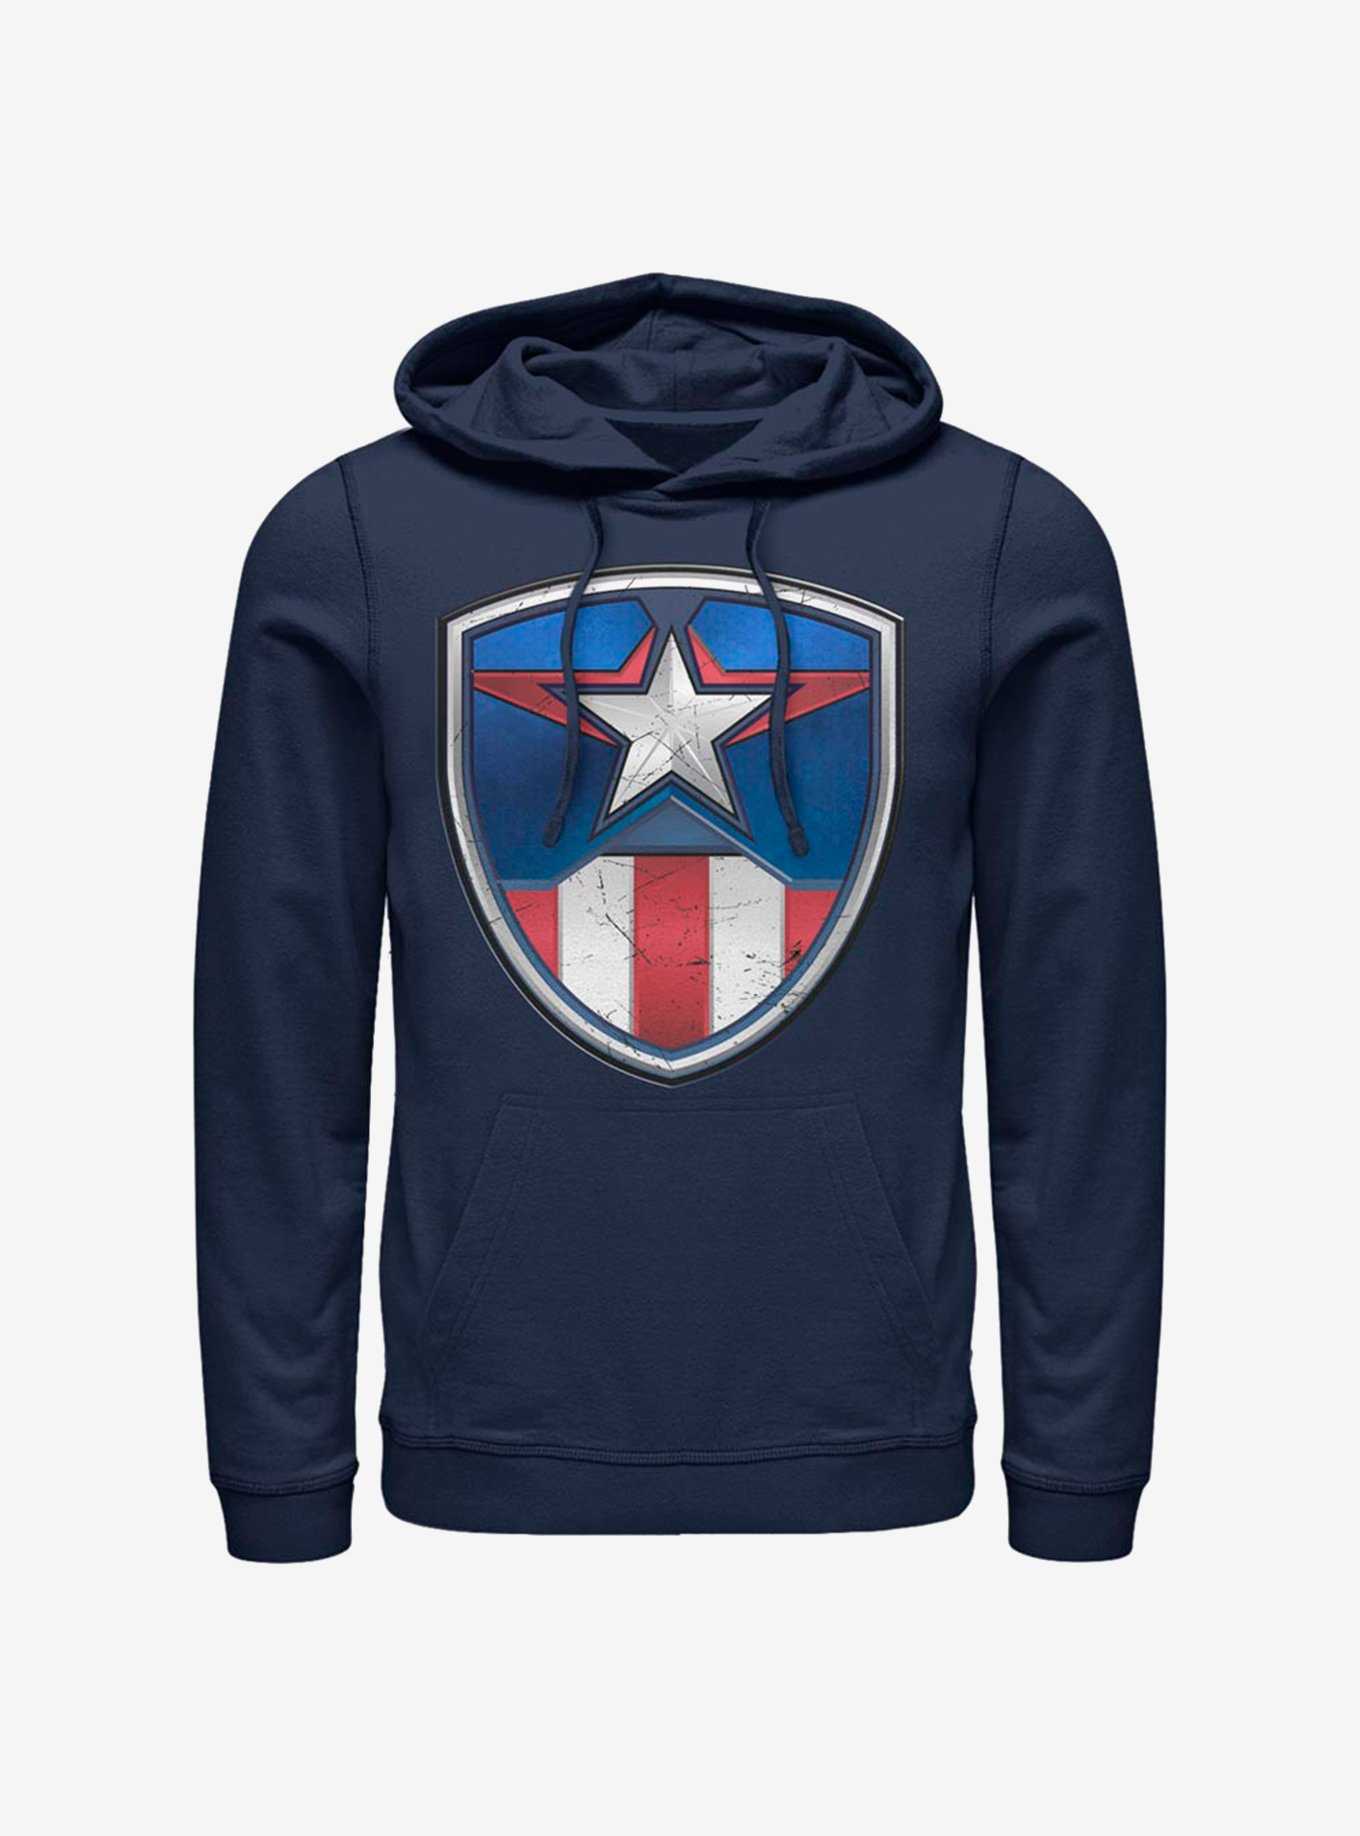 Marvel Captain America Captain Crest Hoodie, , hi-res